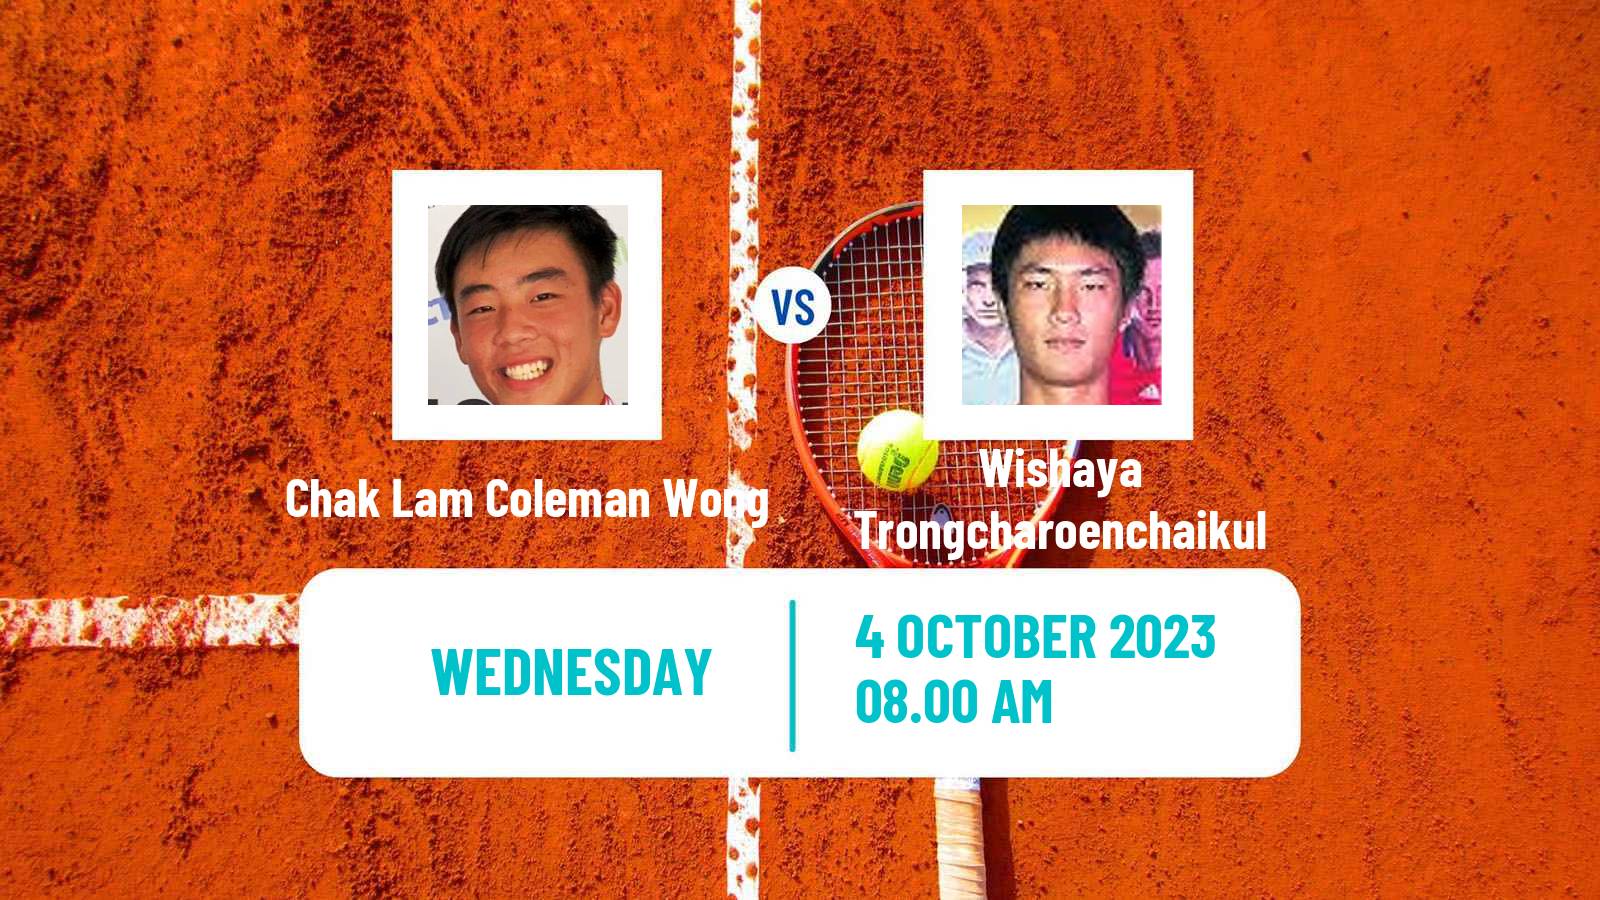 Tennis ITF M15 Doha 7 Men Chak Lam Coleman Wong - Wishaya Trongcharoenchaikul